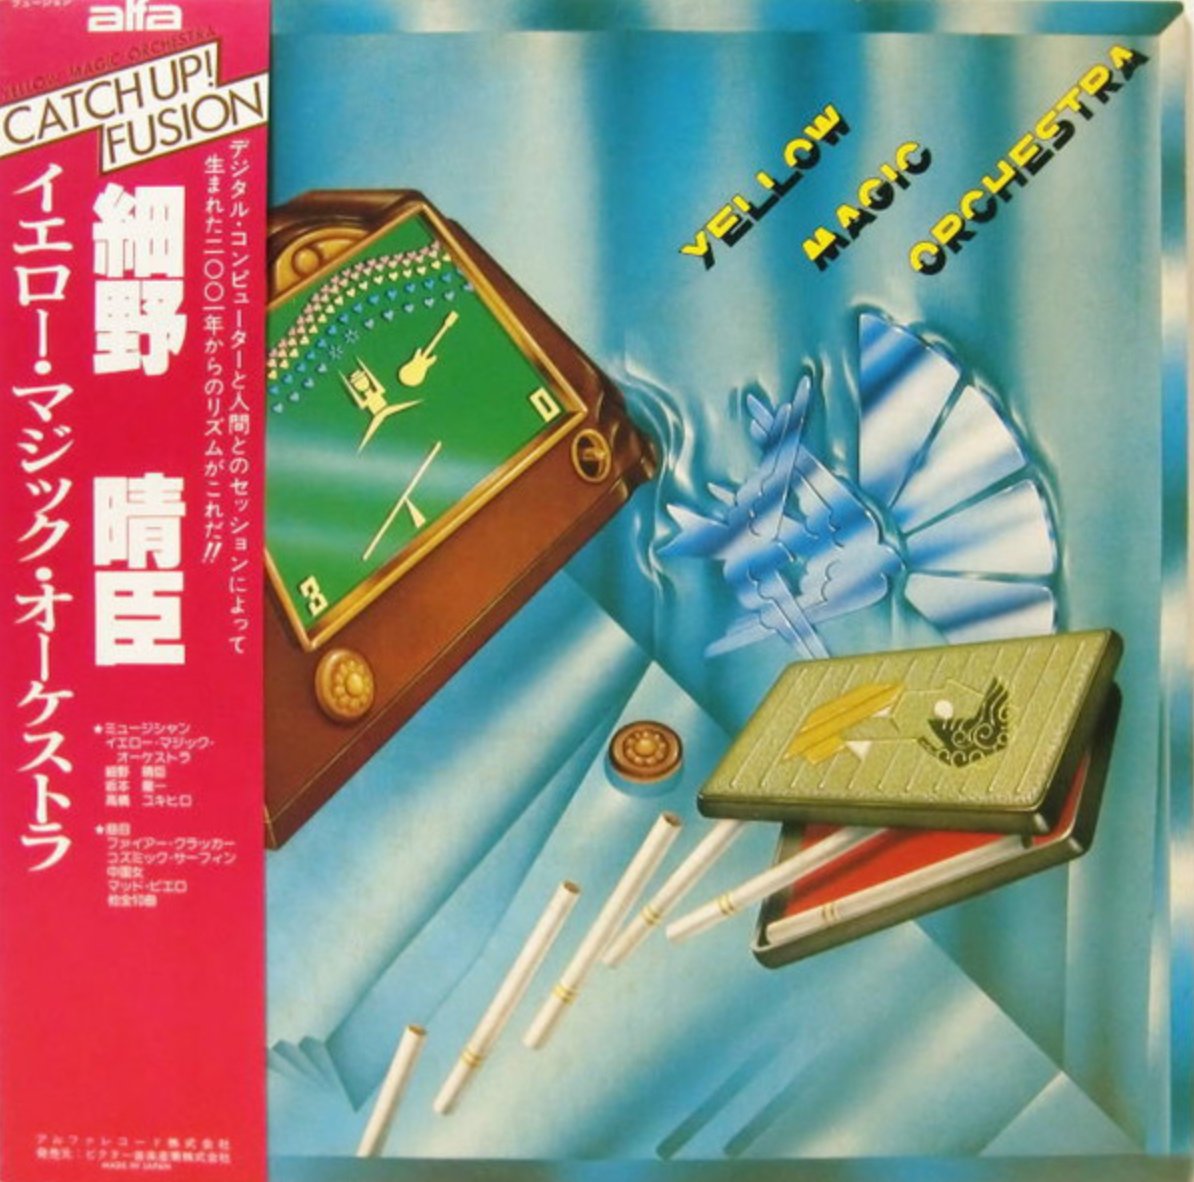 Yellow Magic Orchestra - Yellow Magic Orchestra (Japan Import) - Inner Ocean Records